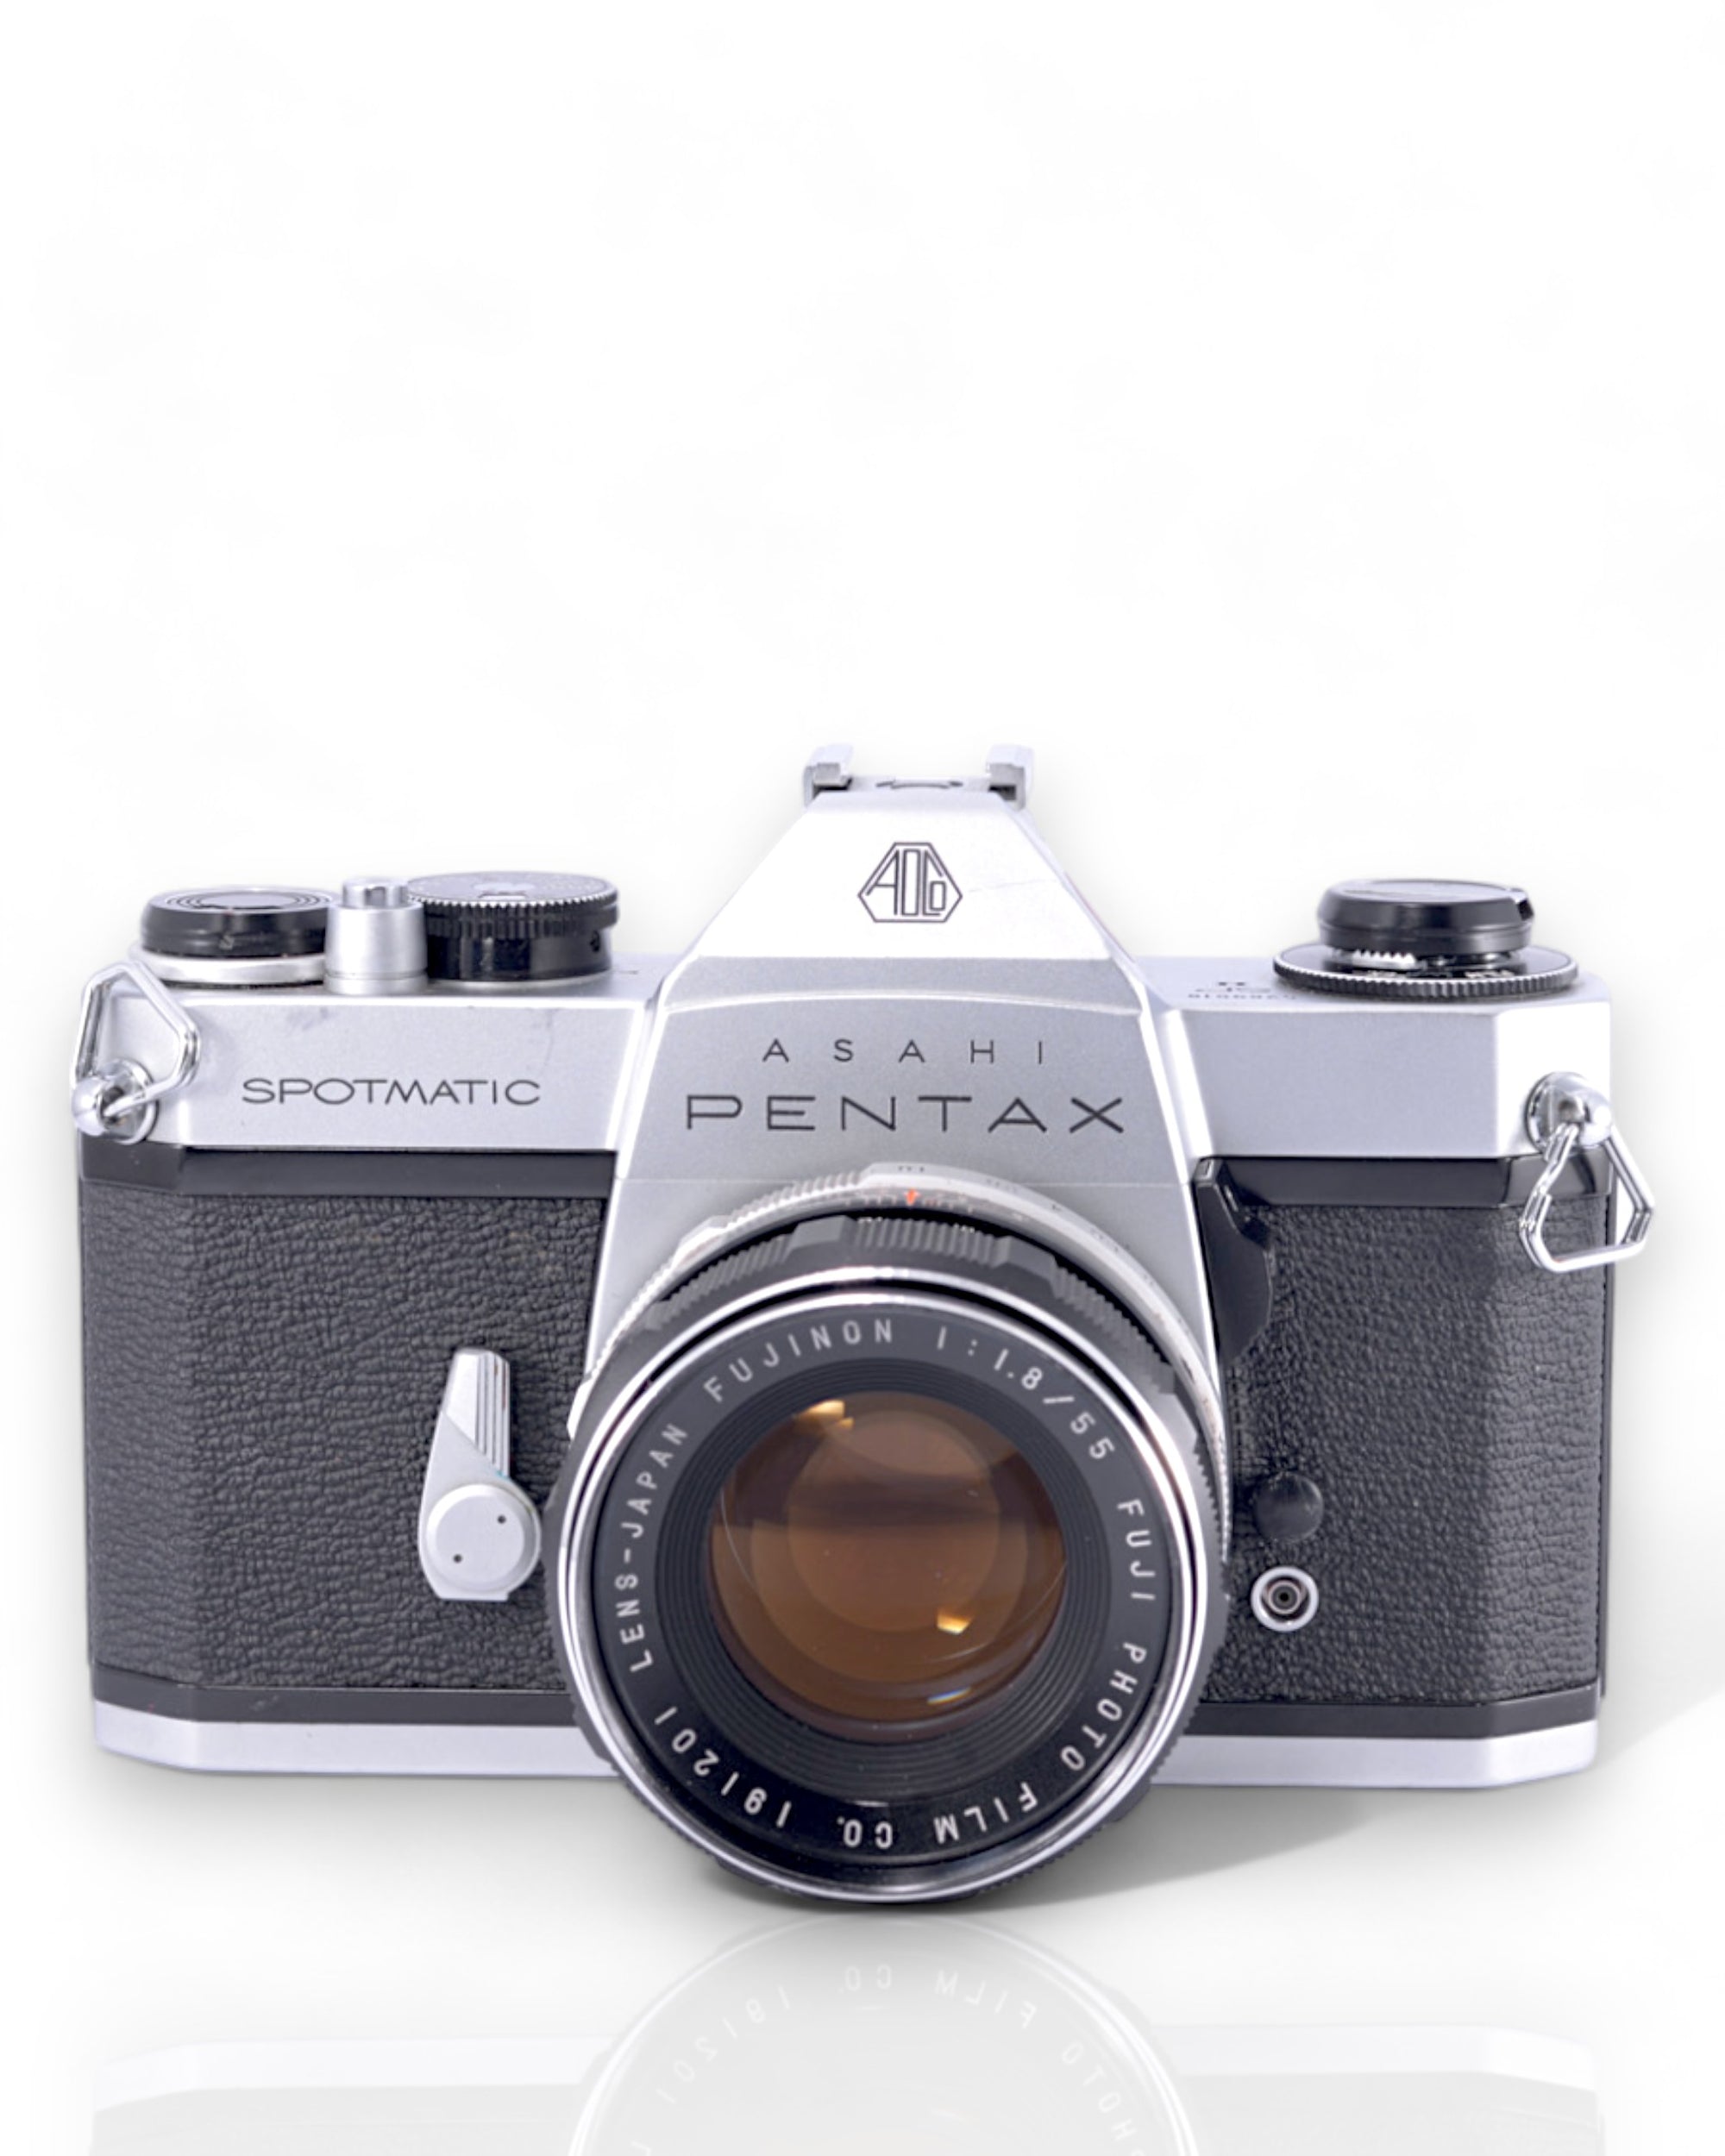 Pentax Spotmatic SP II 35mm SLR film camera with 55mm f1.8 lens